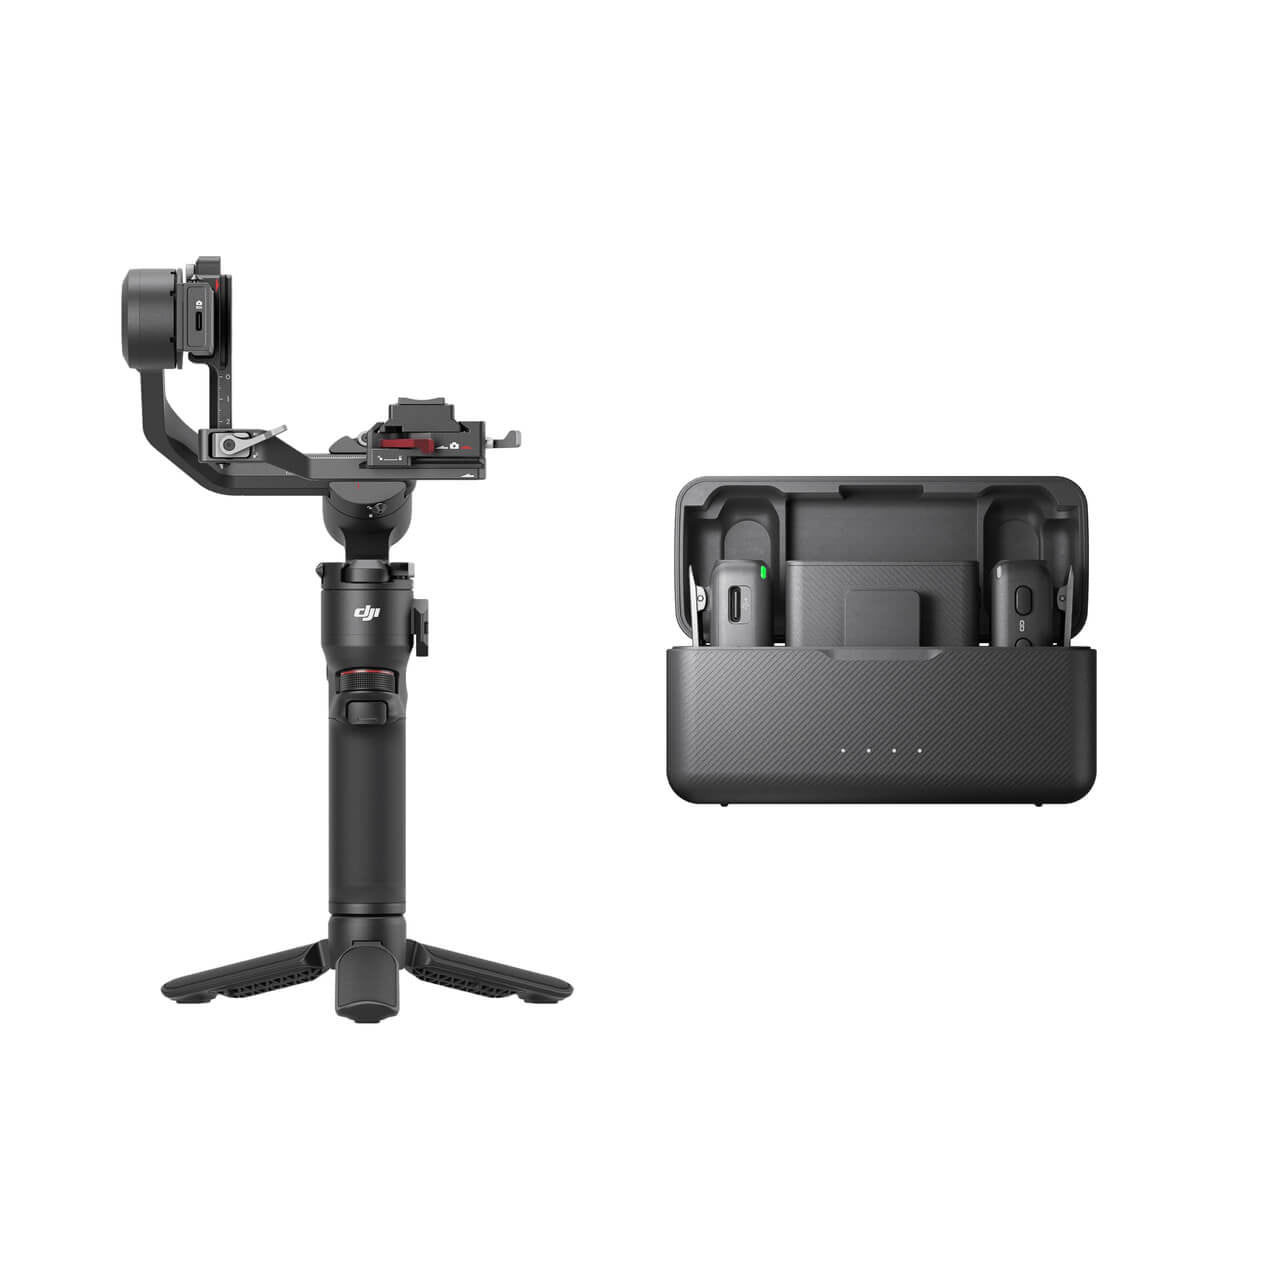 vlogsfan Gimbal DJI RS 3 Handheld Mini stabilizer – Lightweight